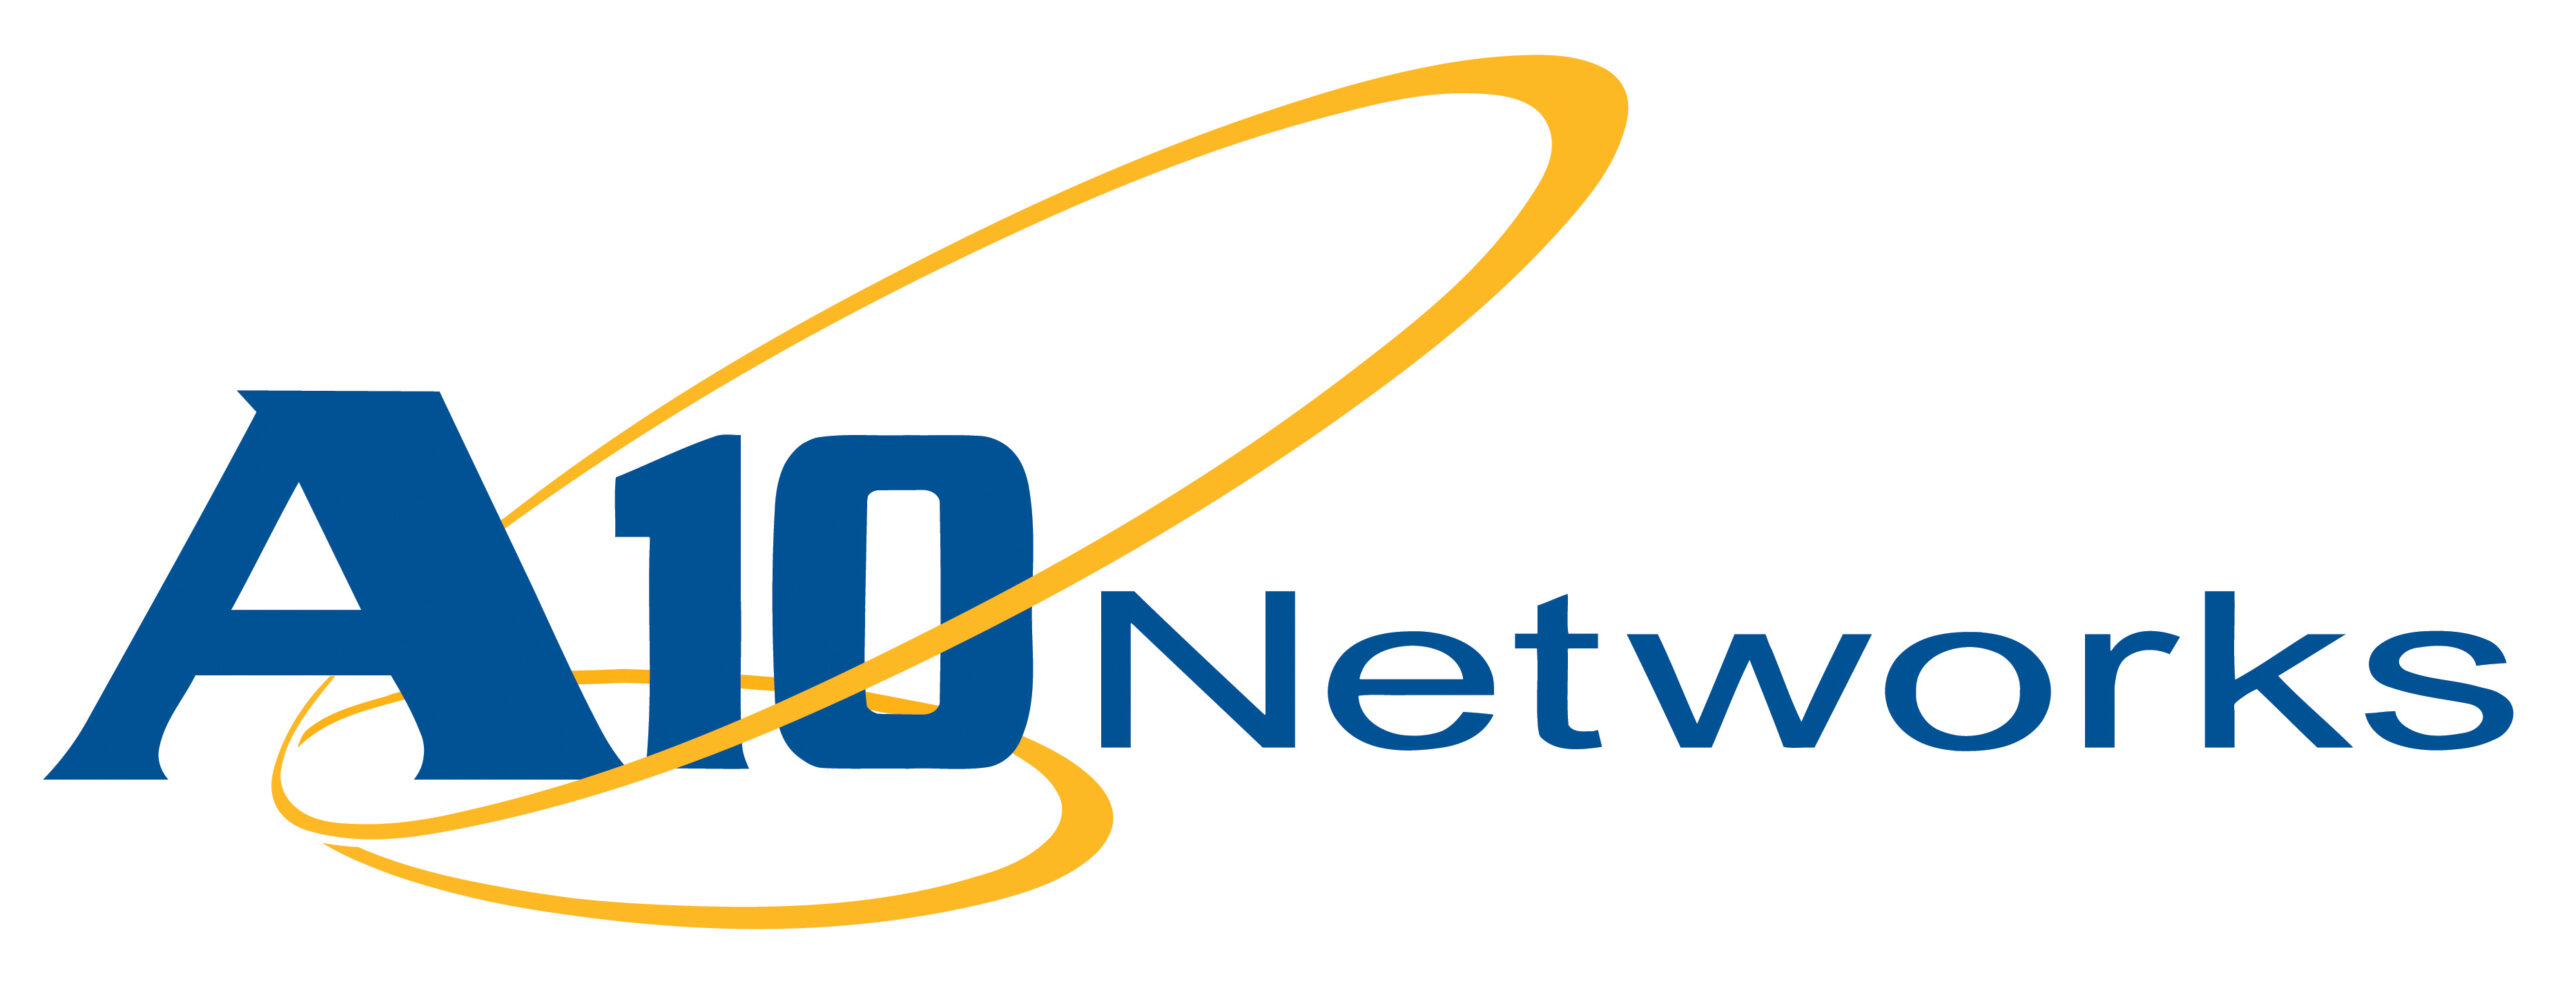 A10 Networks Firmenlogo